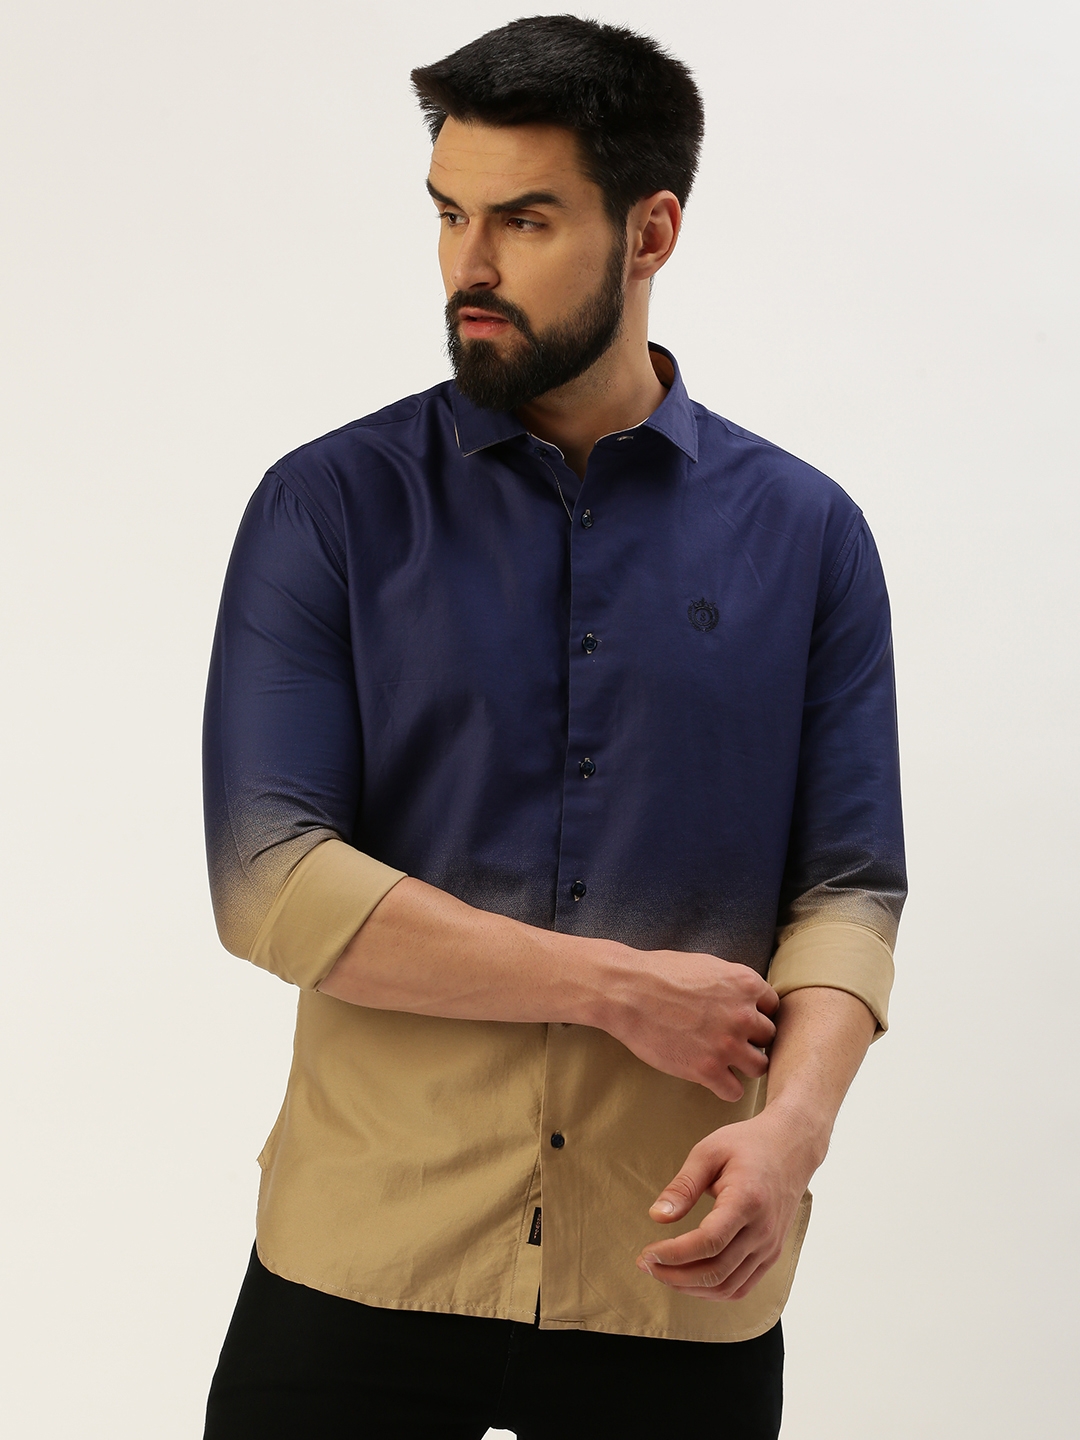 Showoff | SHOWOFF Men's Spread Collar Solid Navy Blue Regular Fit Shirt 1